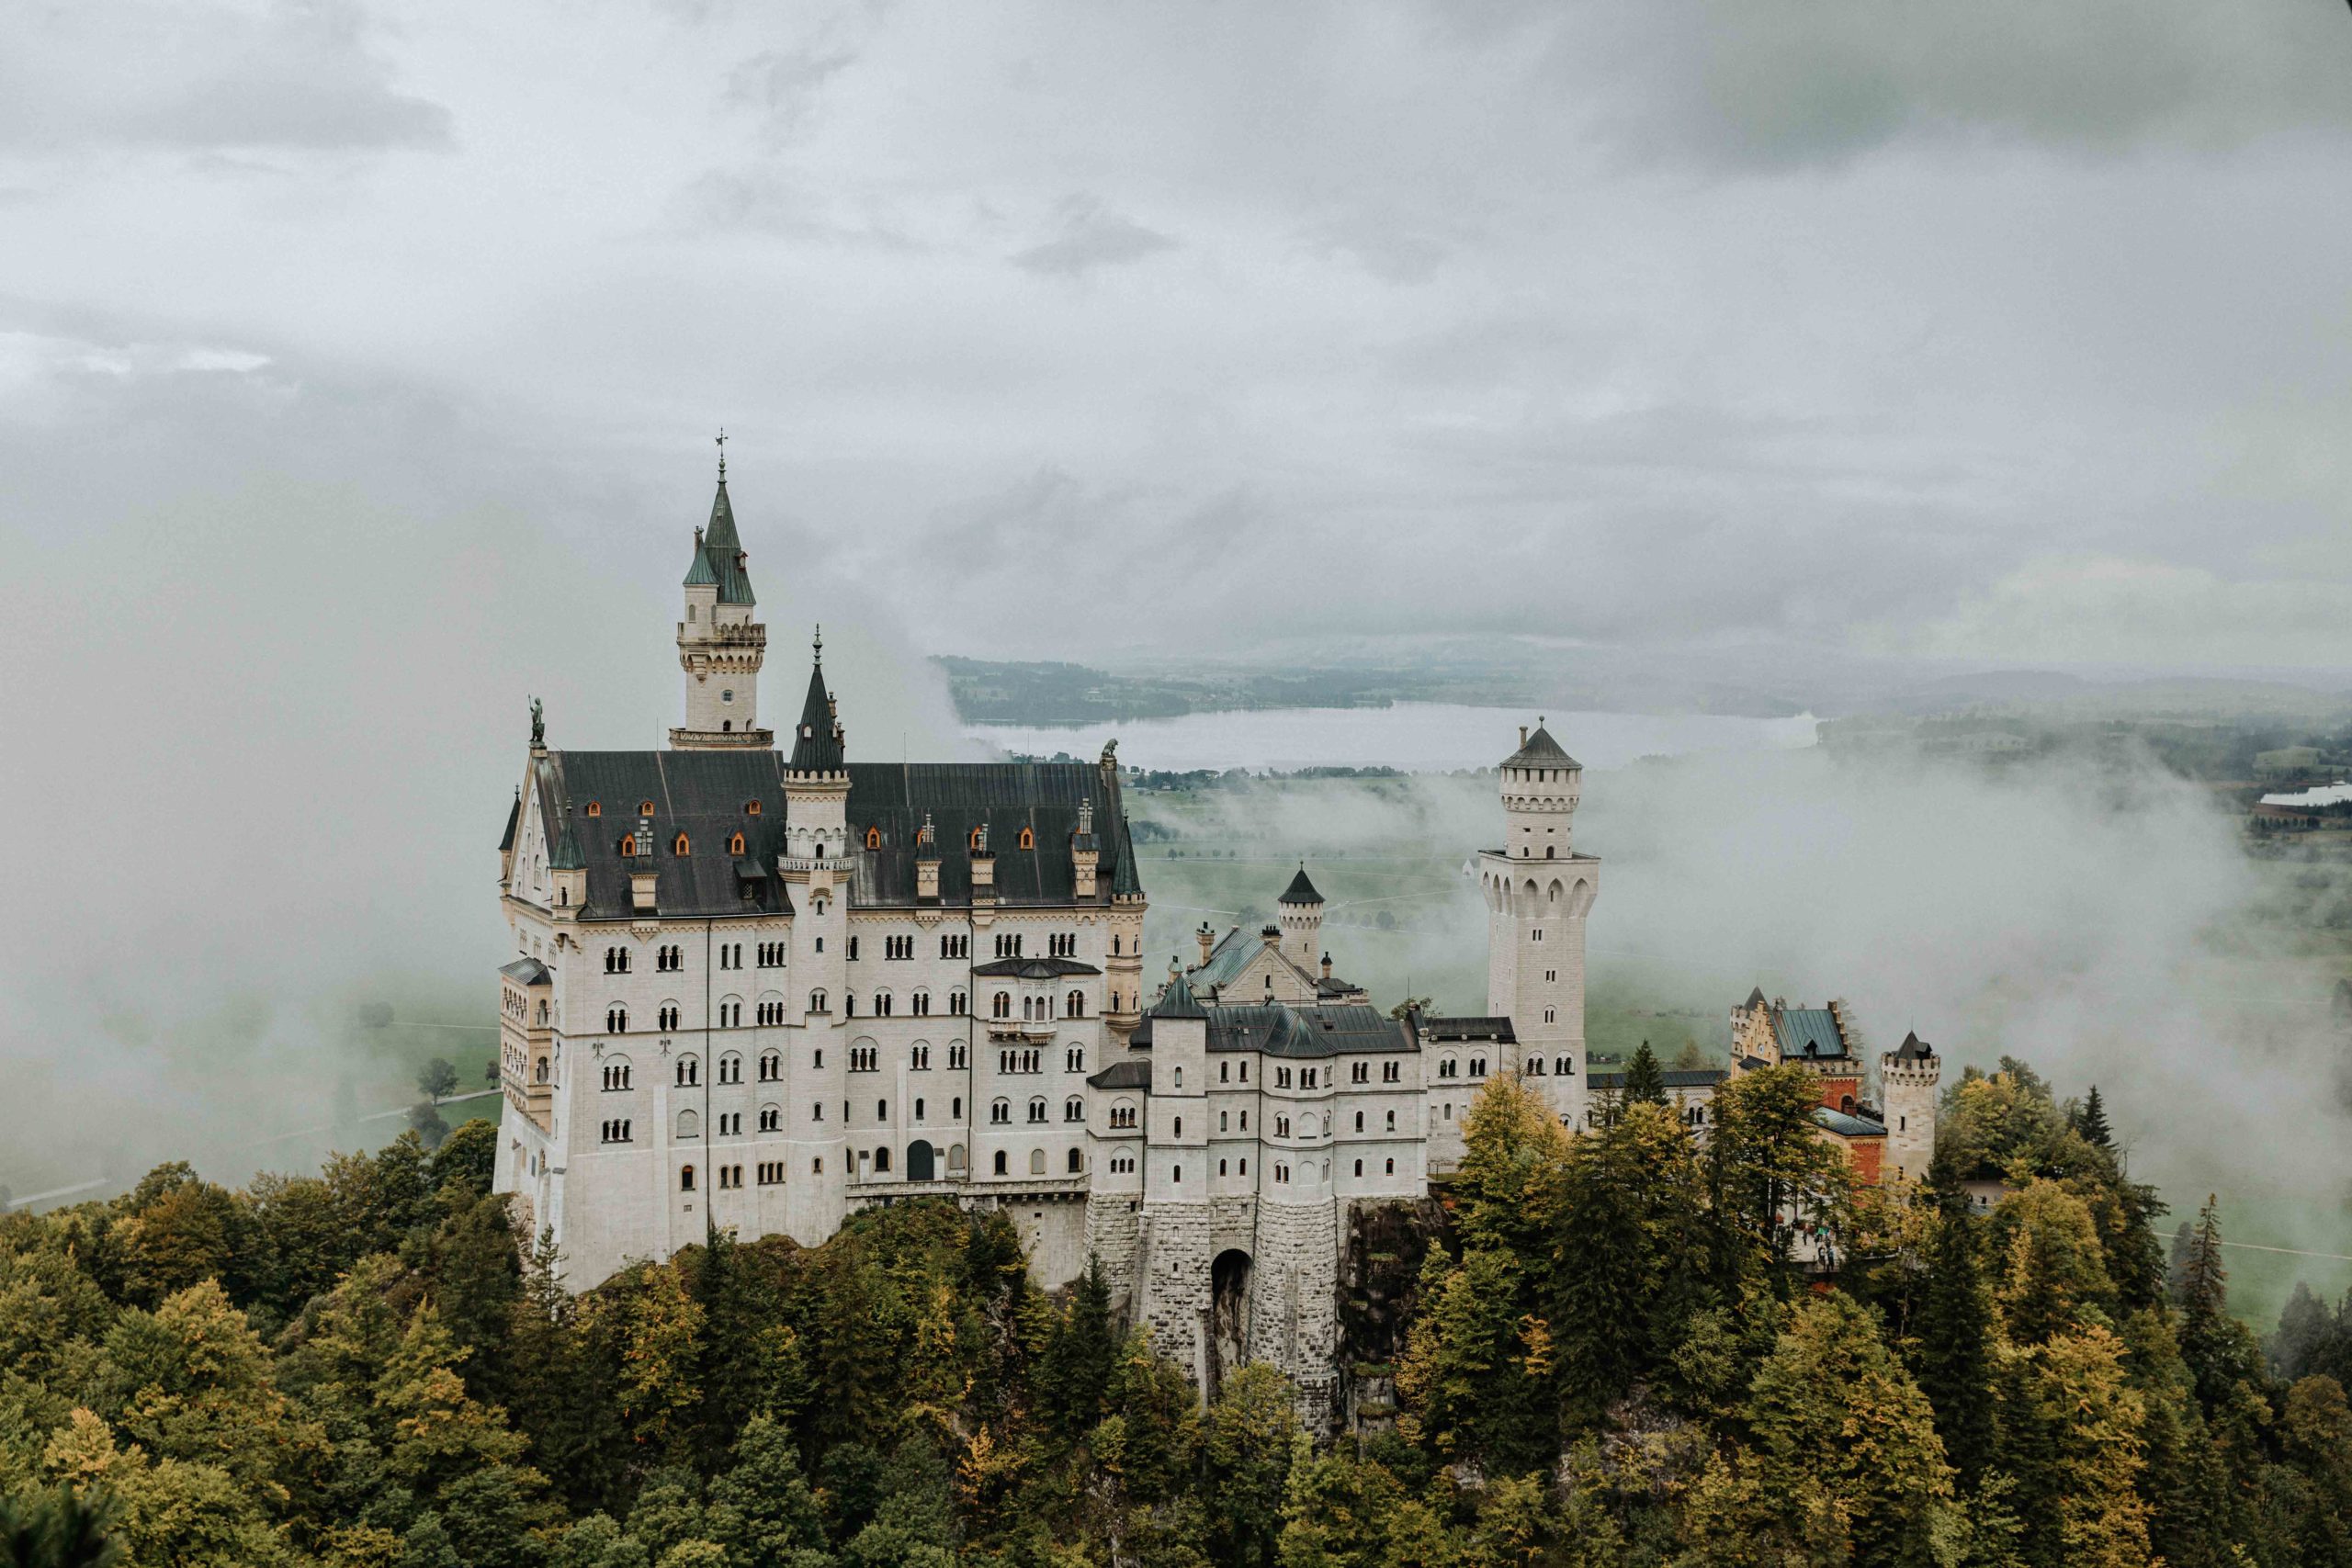 Schloss Neuschwanstein on a fall day with mist surrounding the building